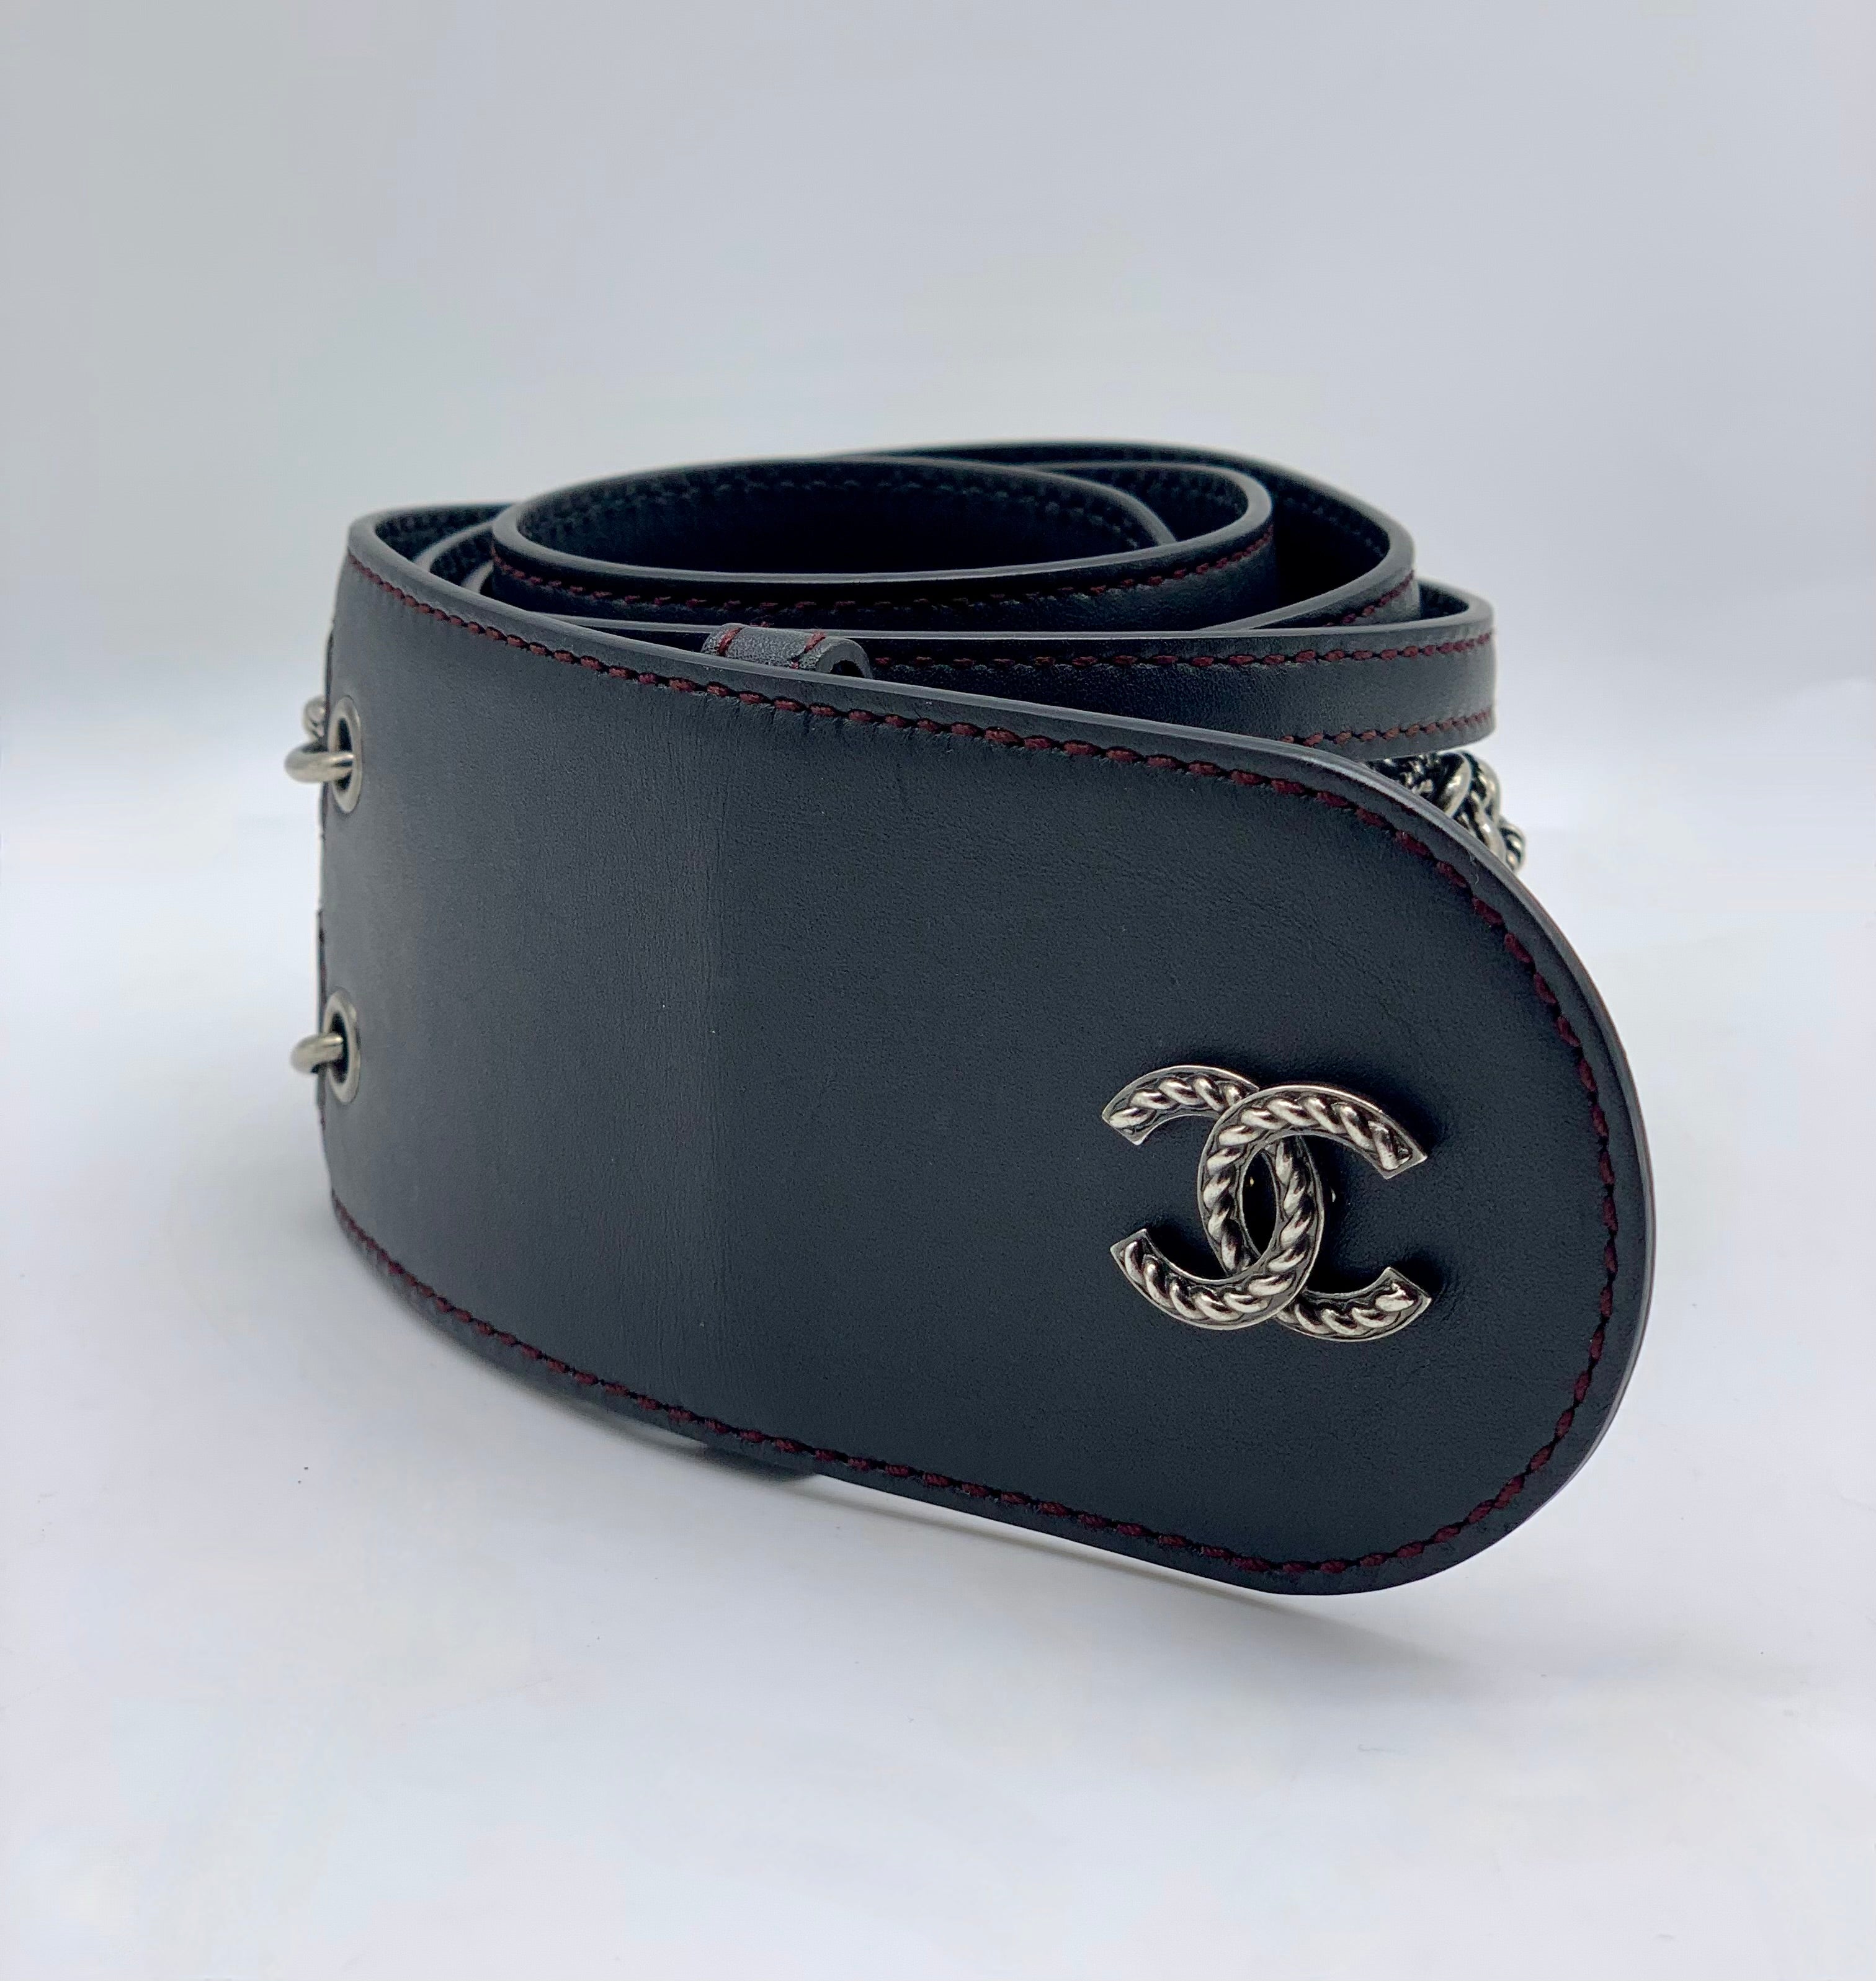 Chanel Black  Gold Belt SIZE 80 AUTHENTIC w PURCHASING RECEIPT  eBay